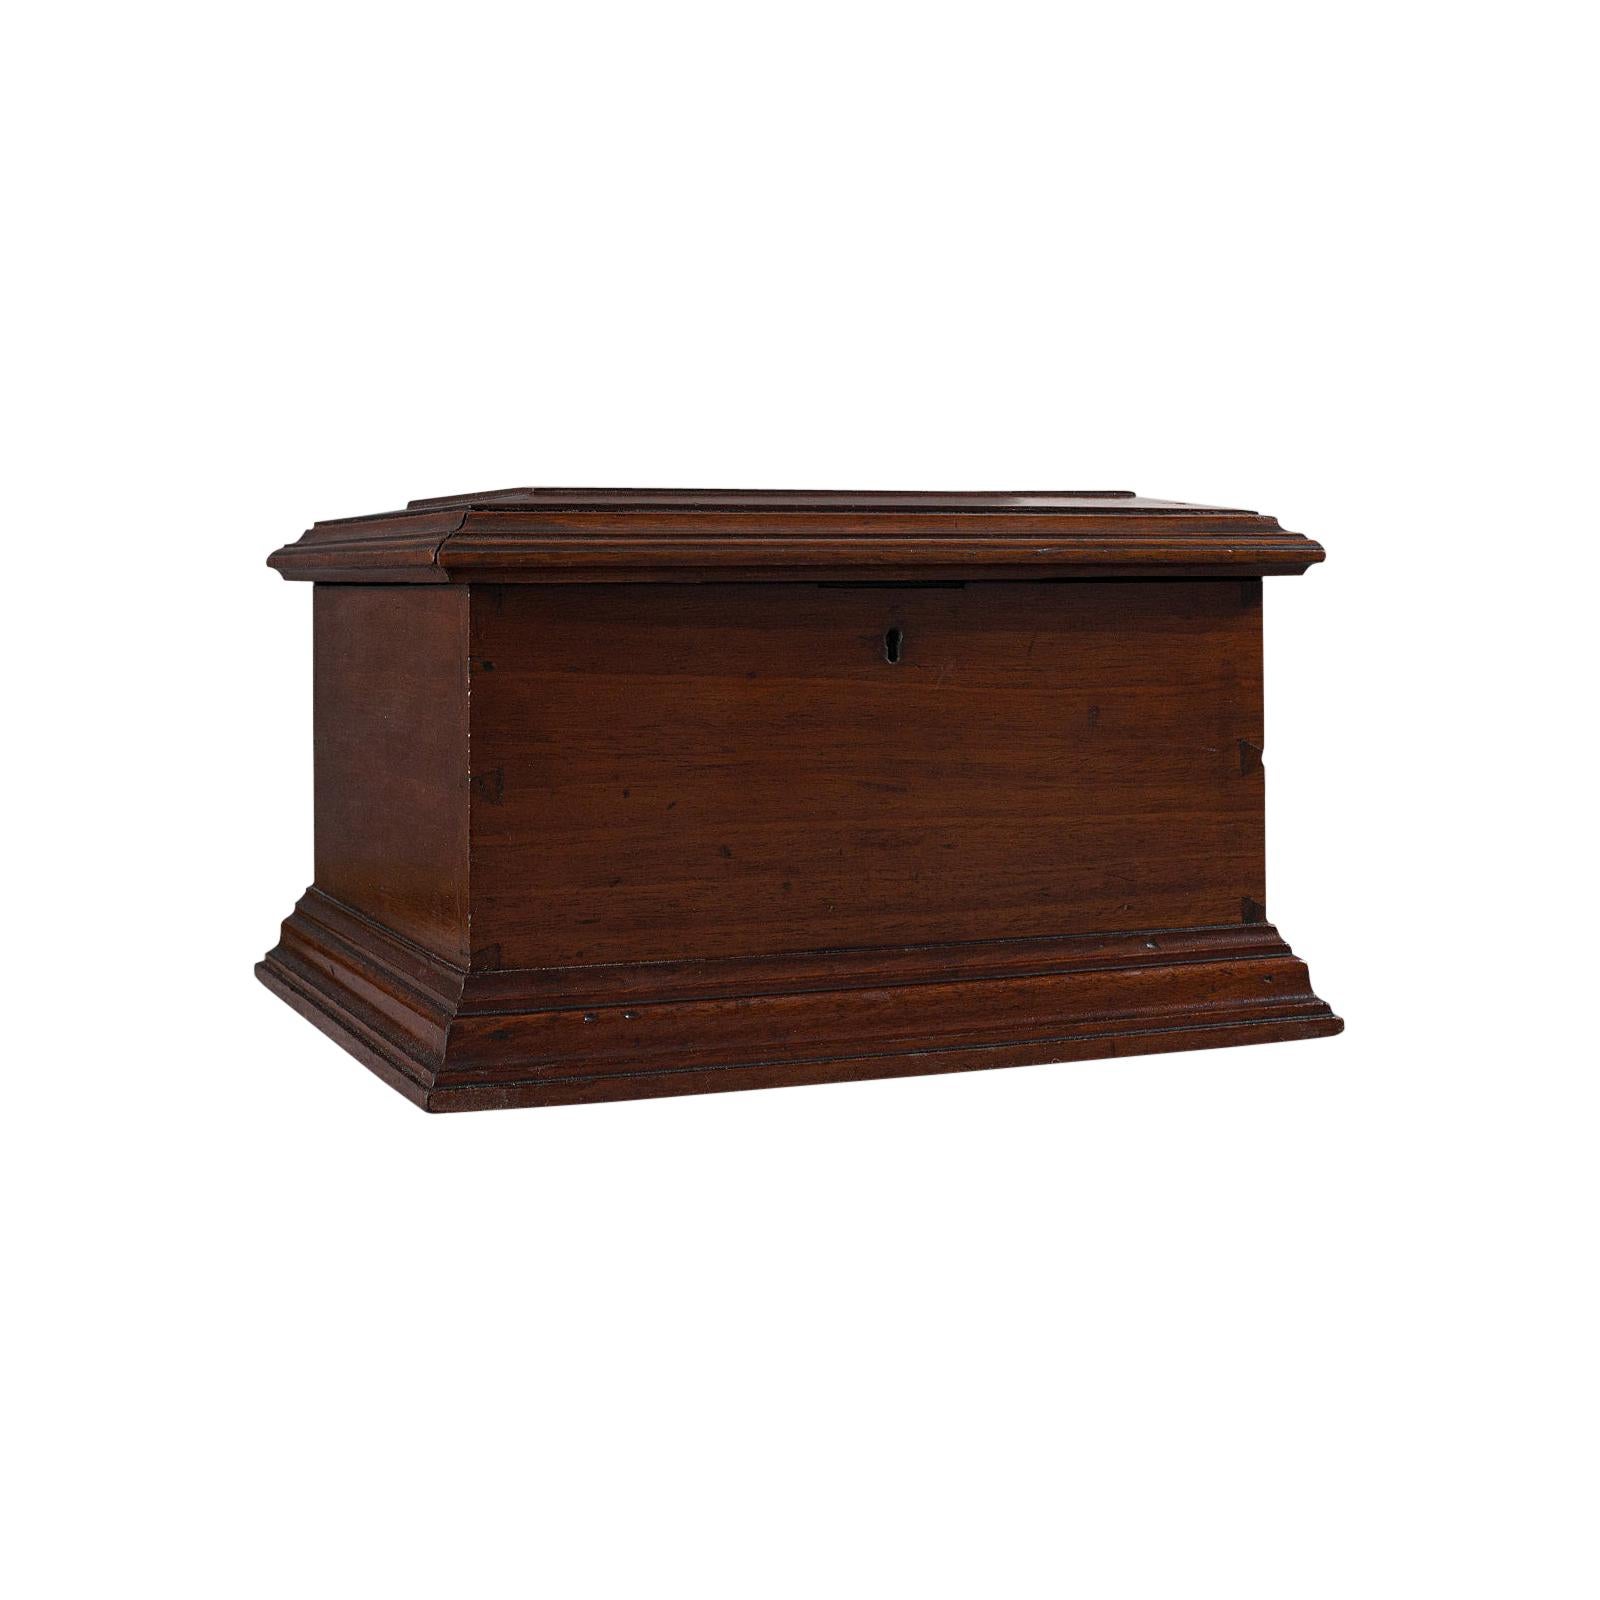 Small Antique Document Box, English, Walnut, Desk, Pen, Sarcophagus, Victorian